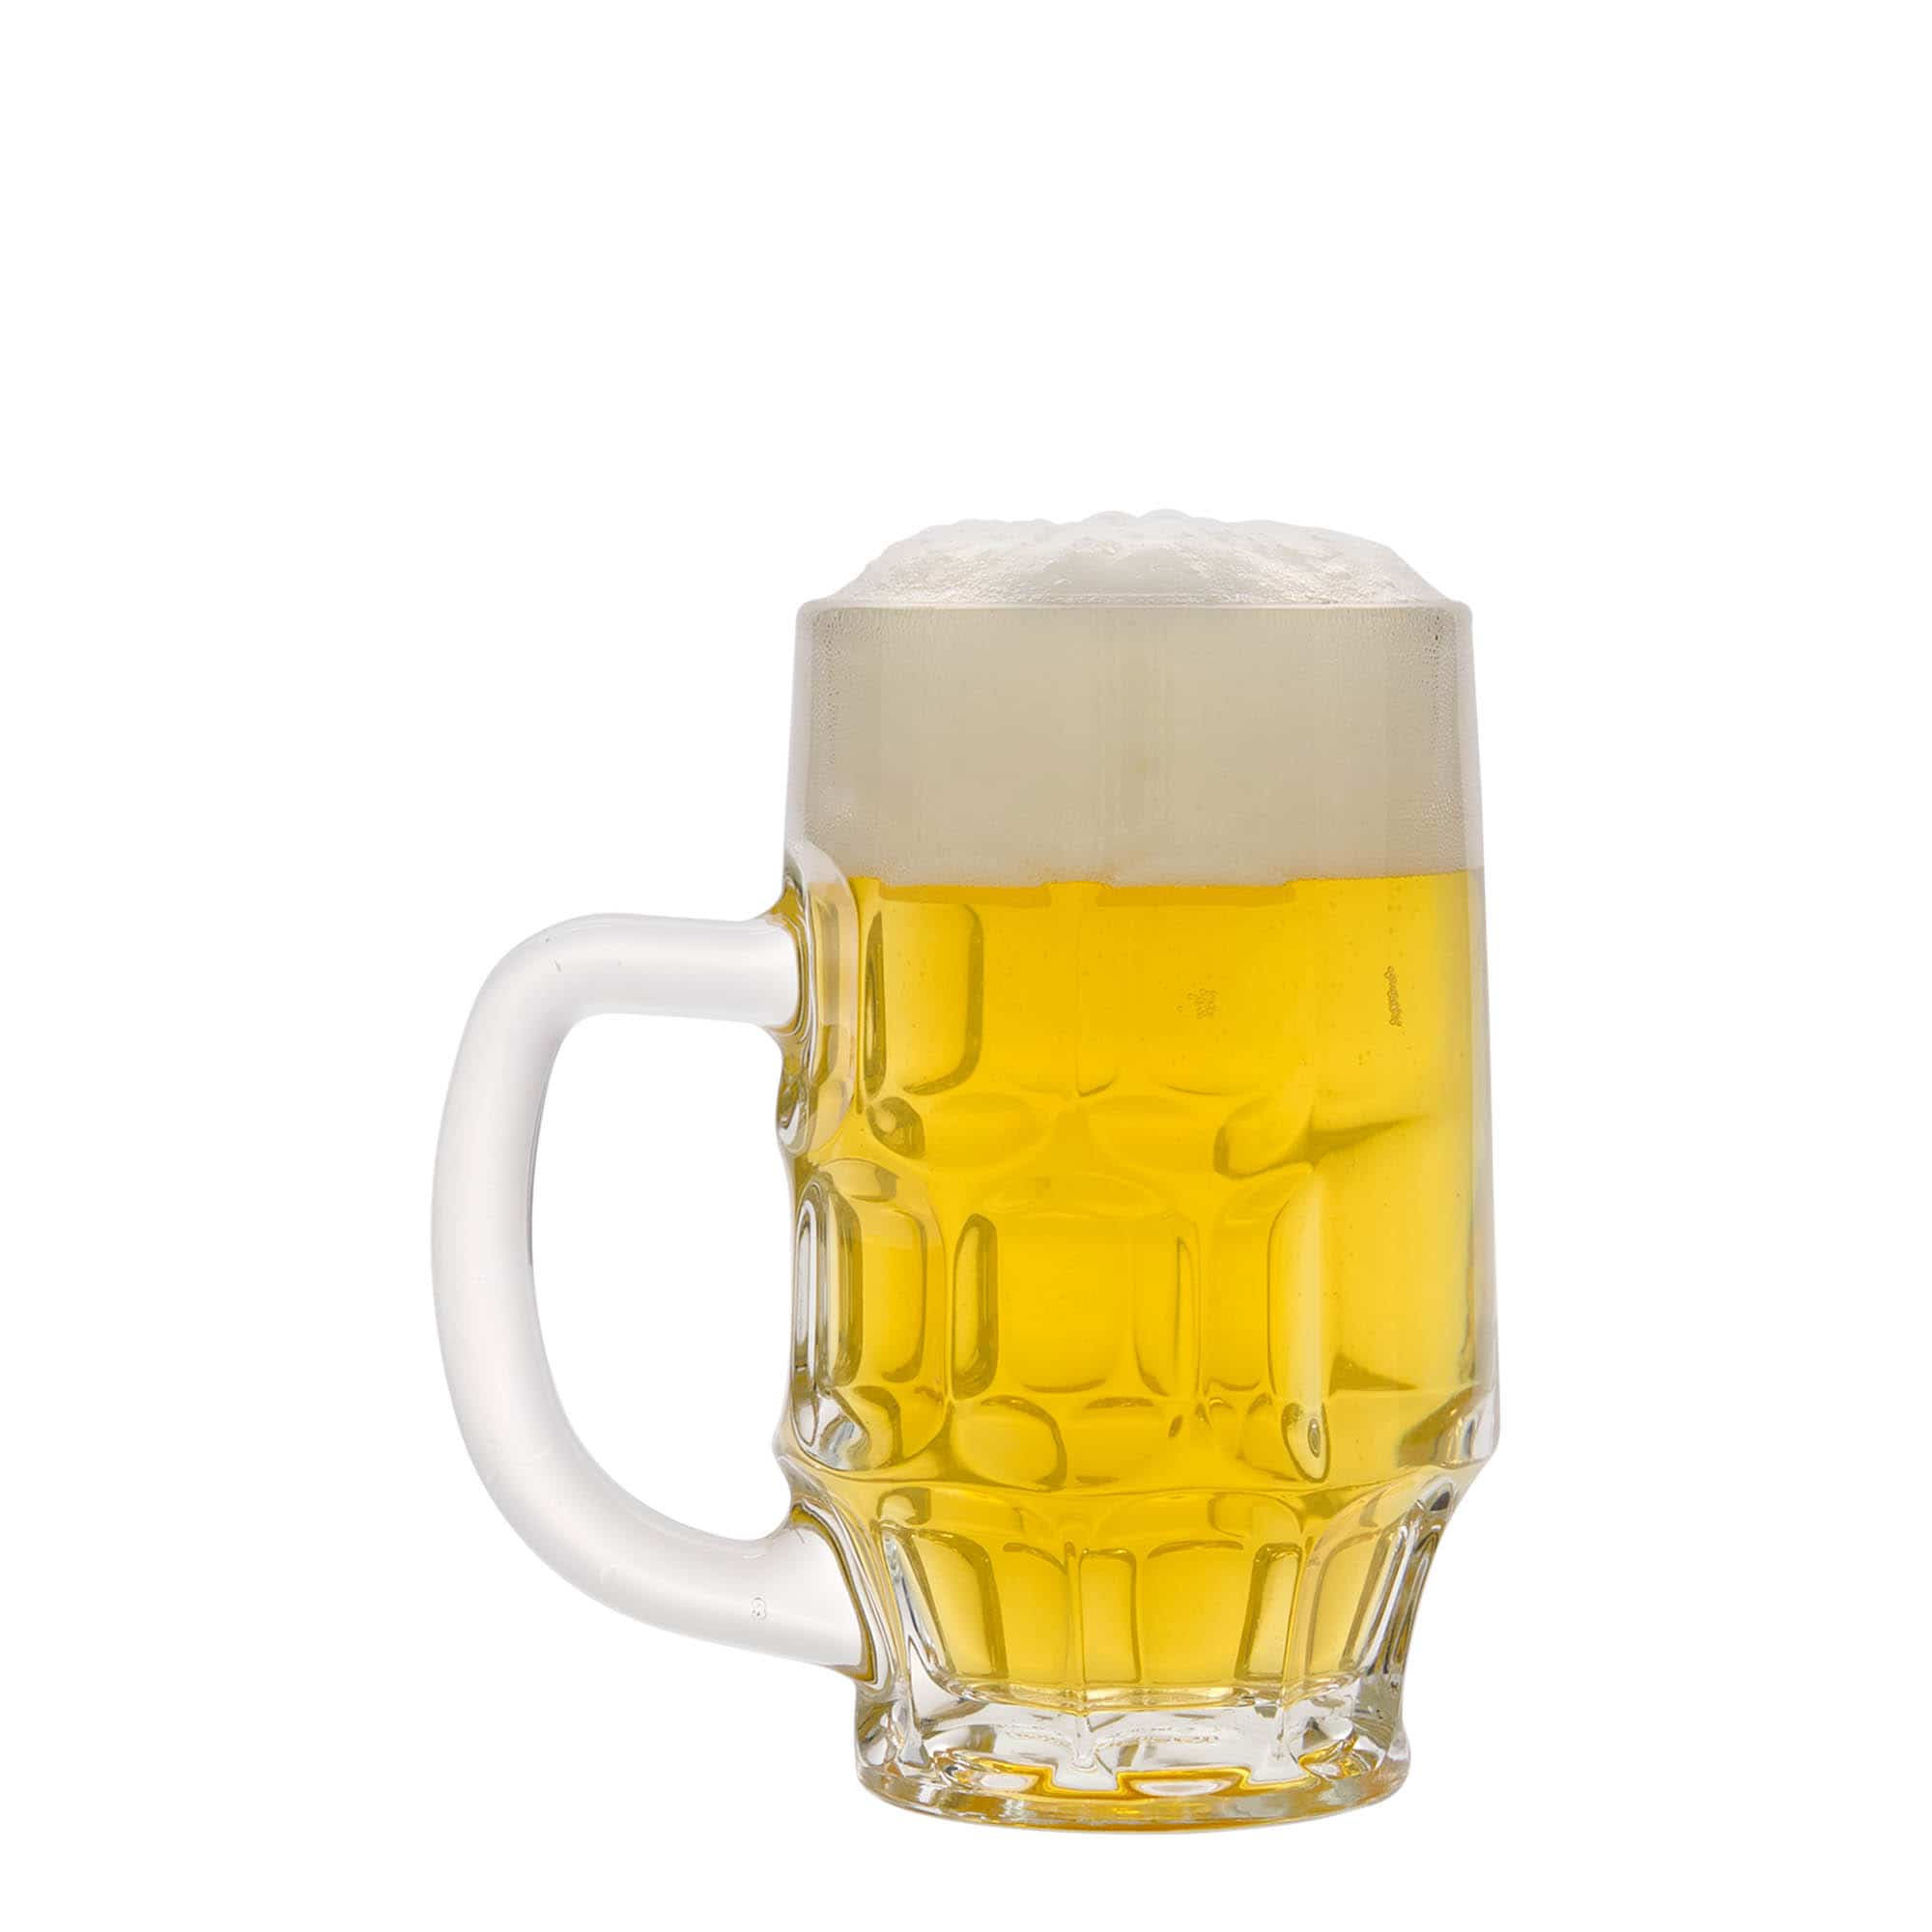 300 ml seidel beer mug 'Braumeister', glass